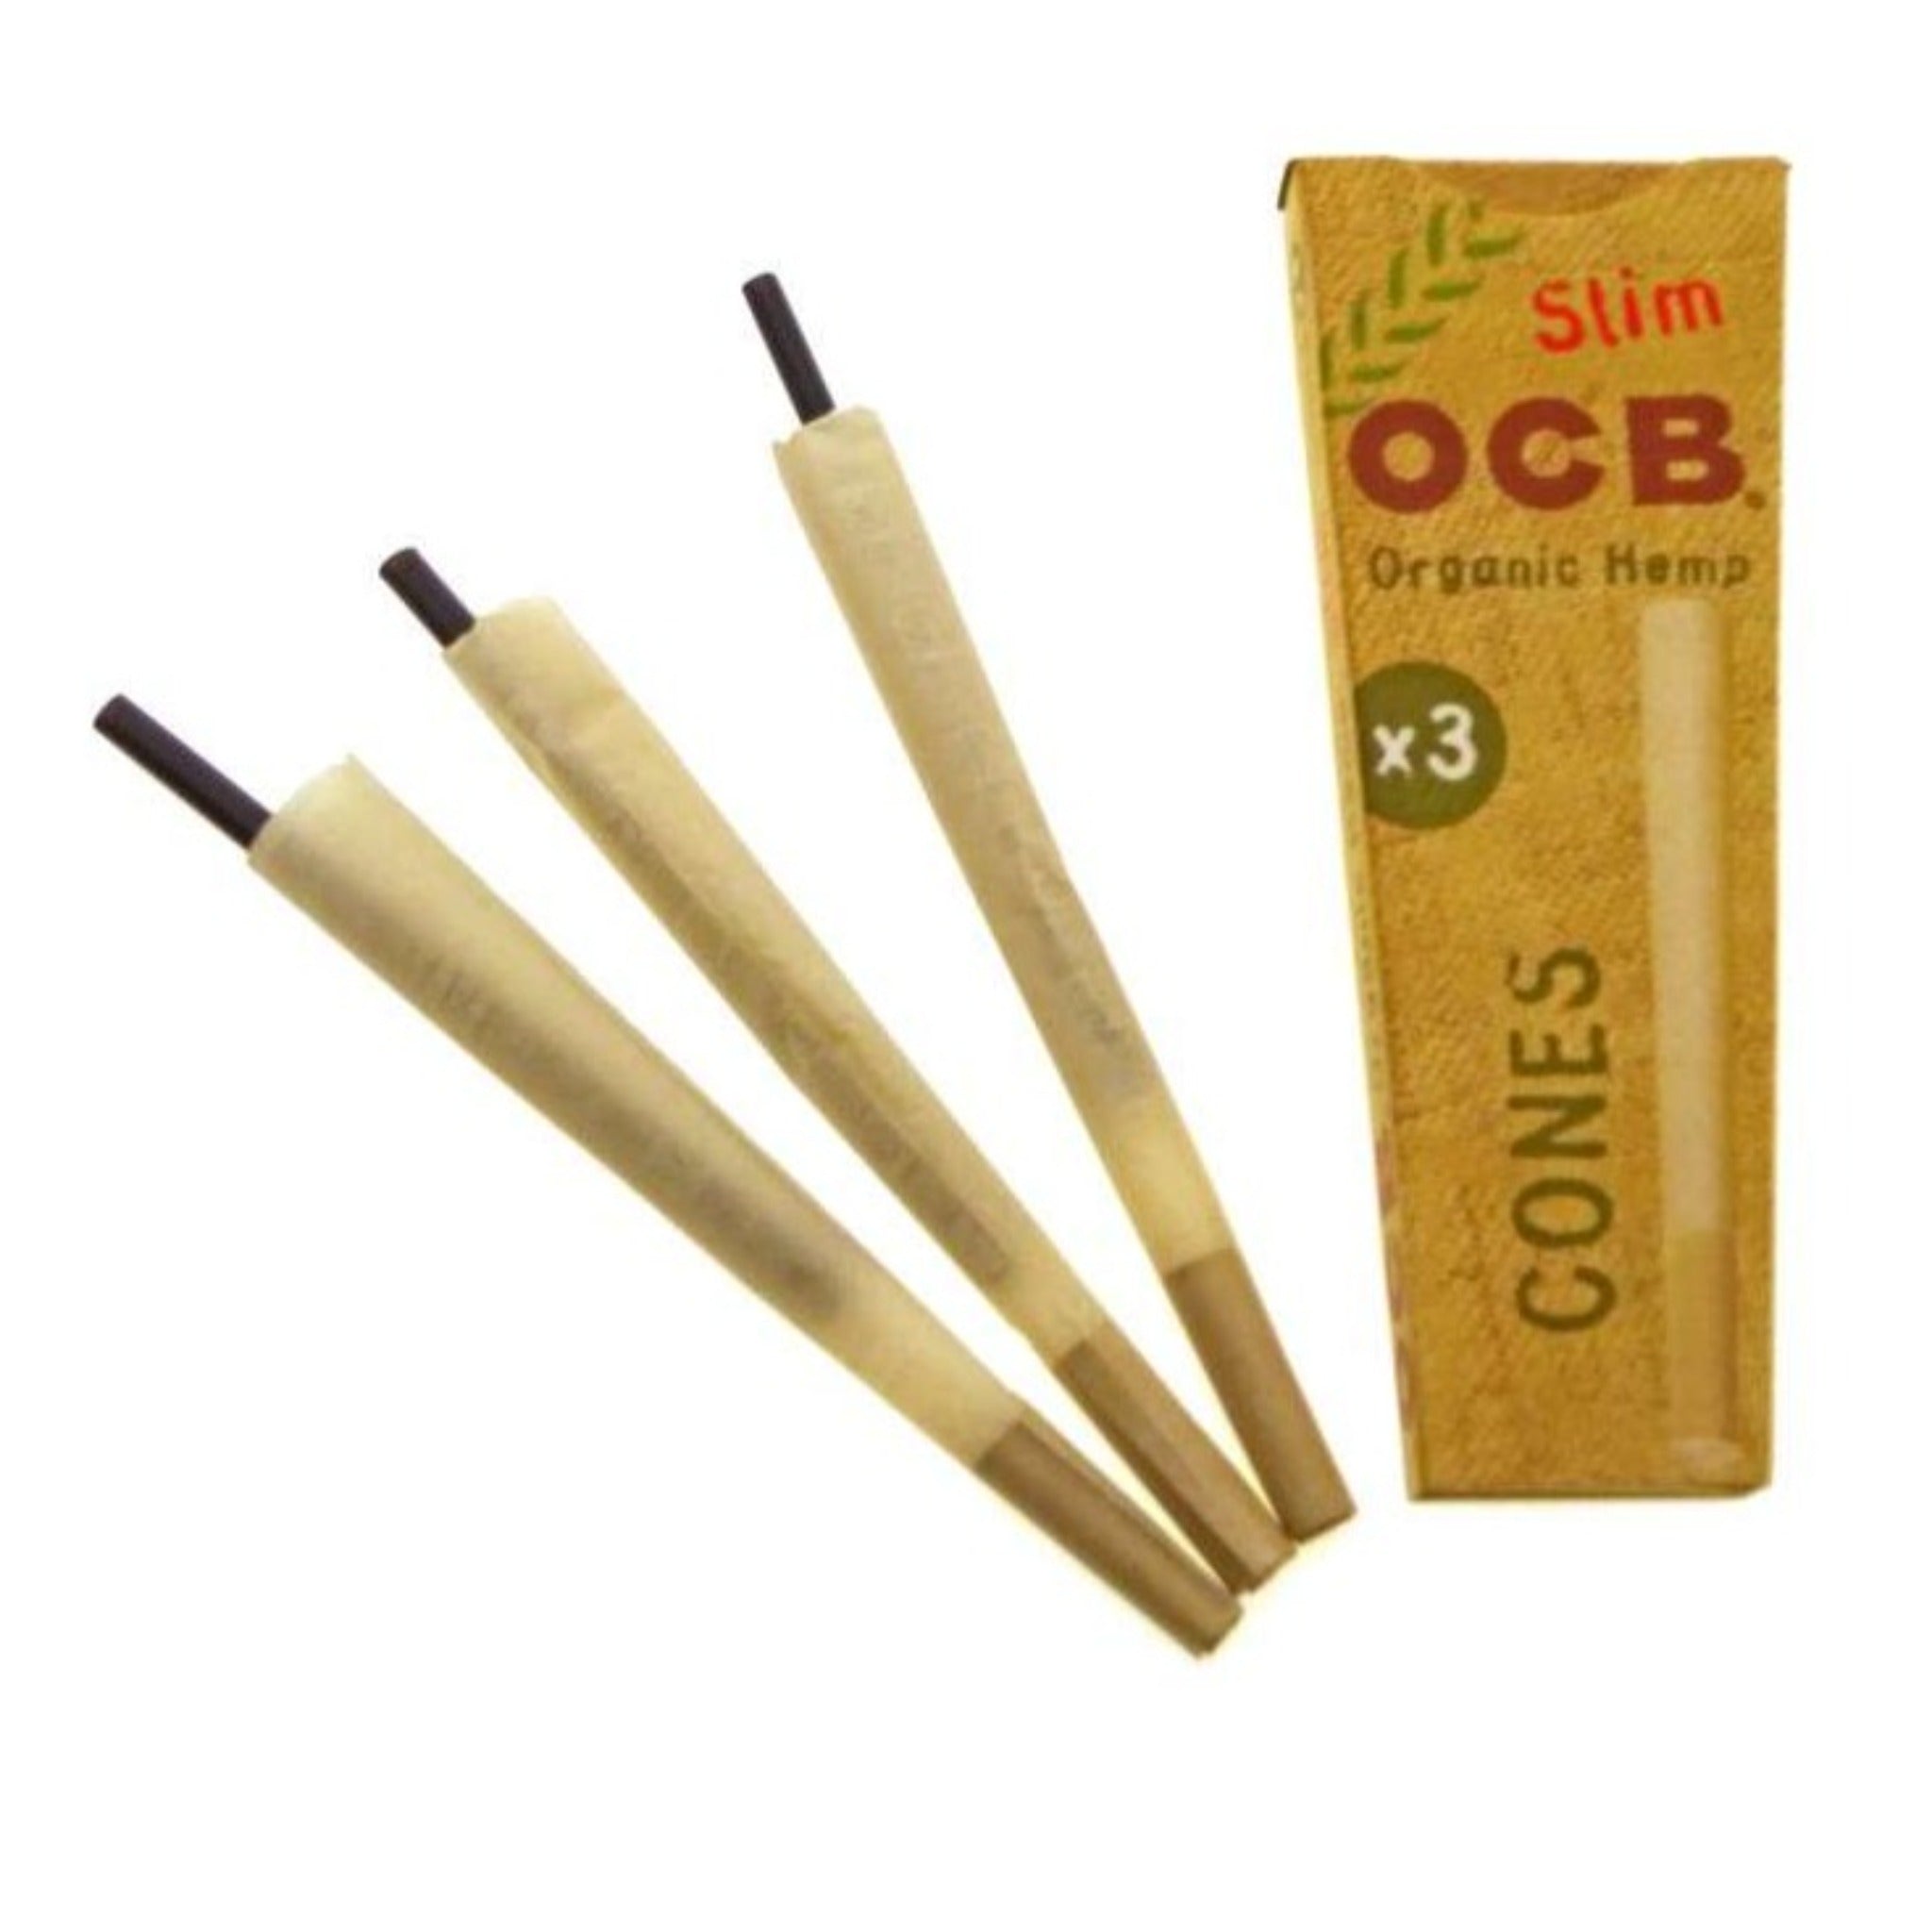 OCB Unbleached Organic Hemp Cones